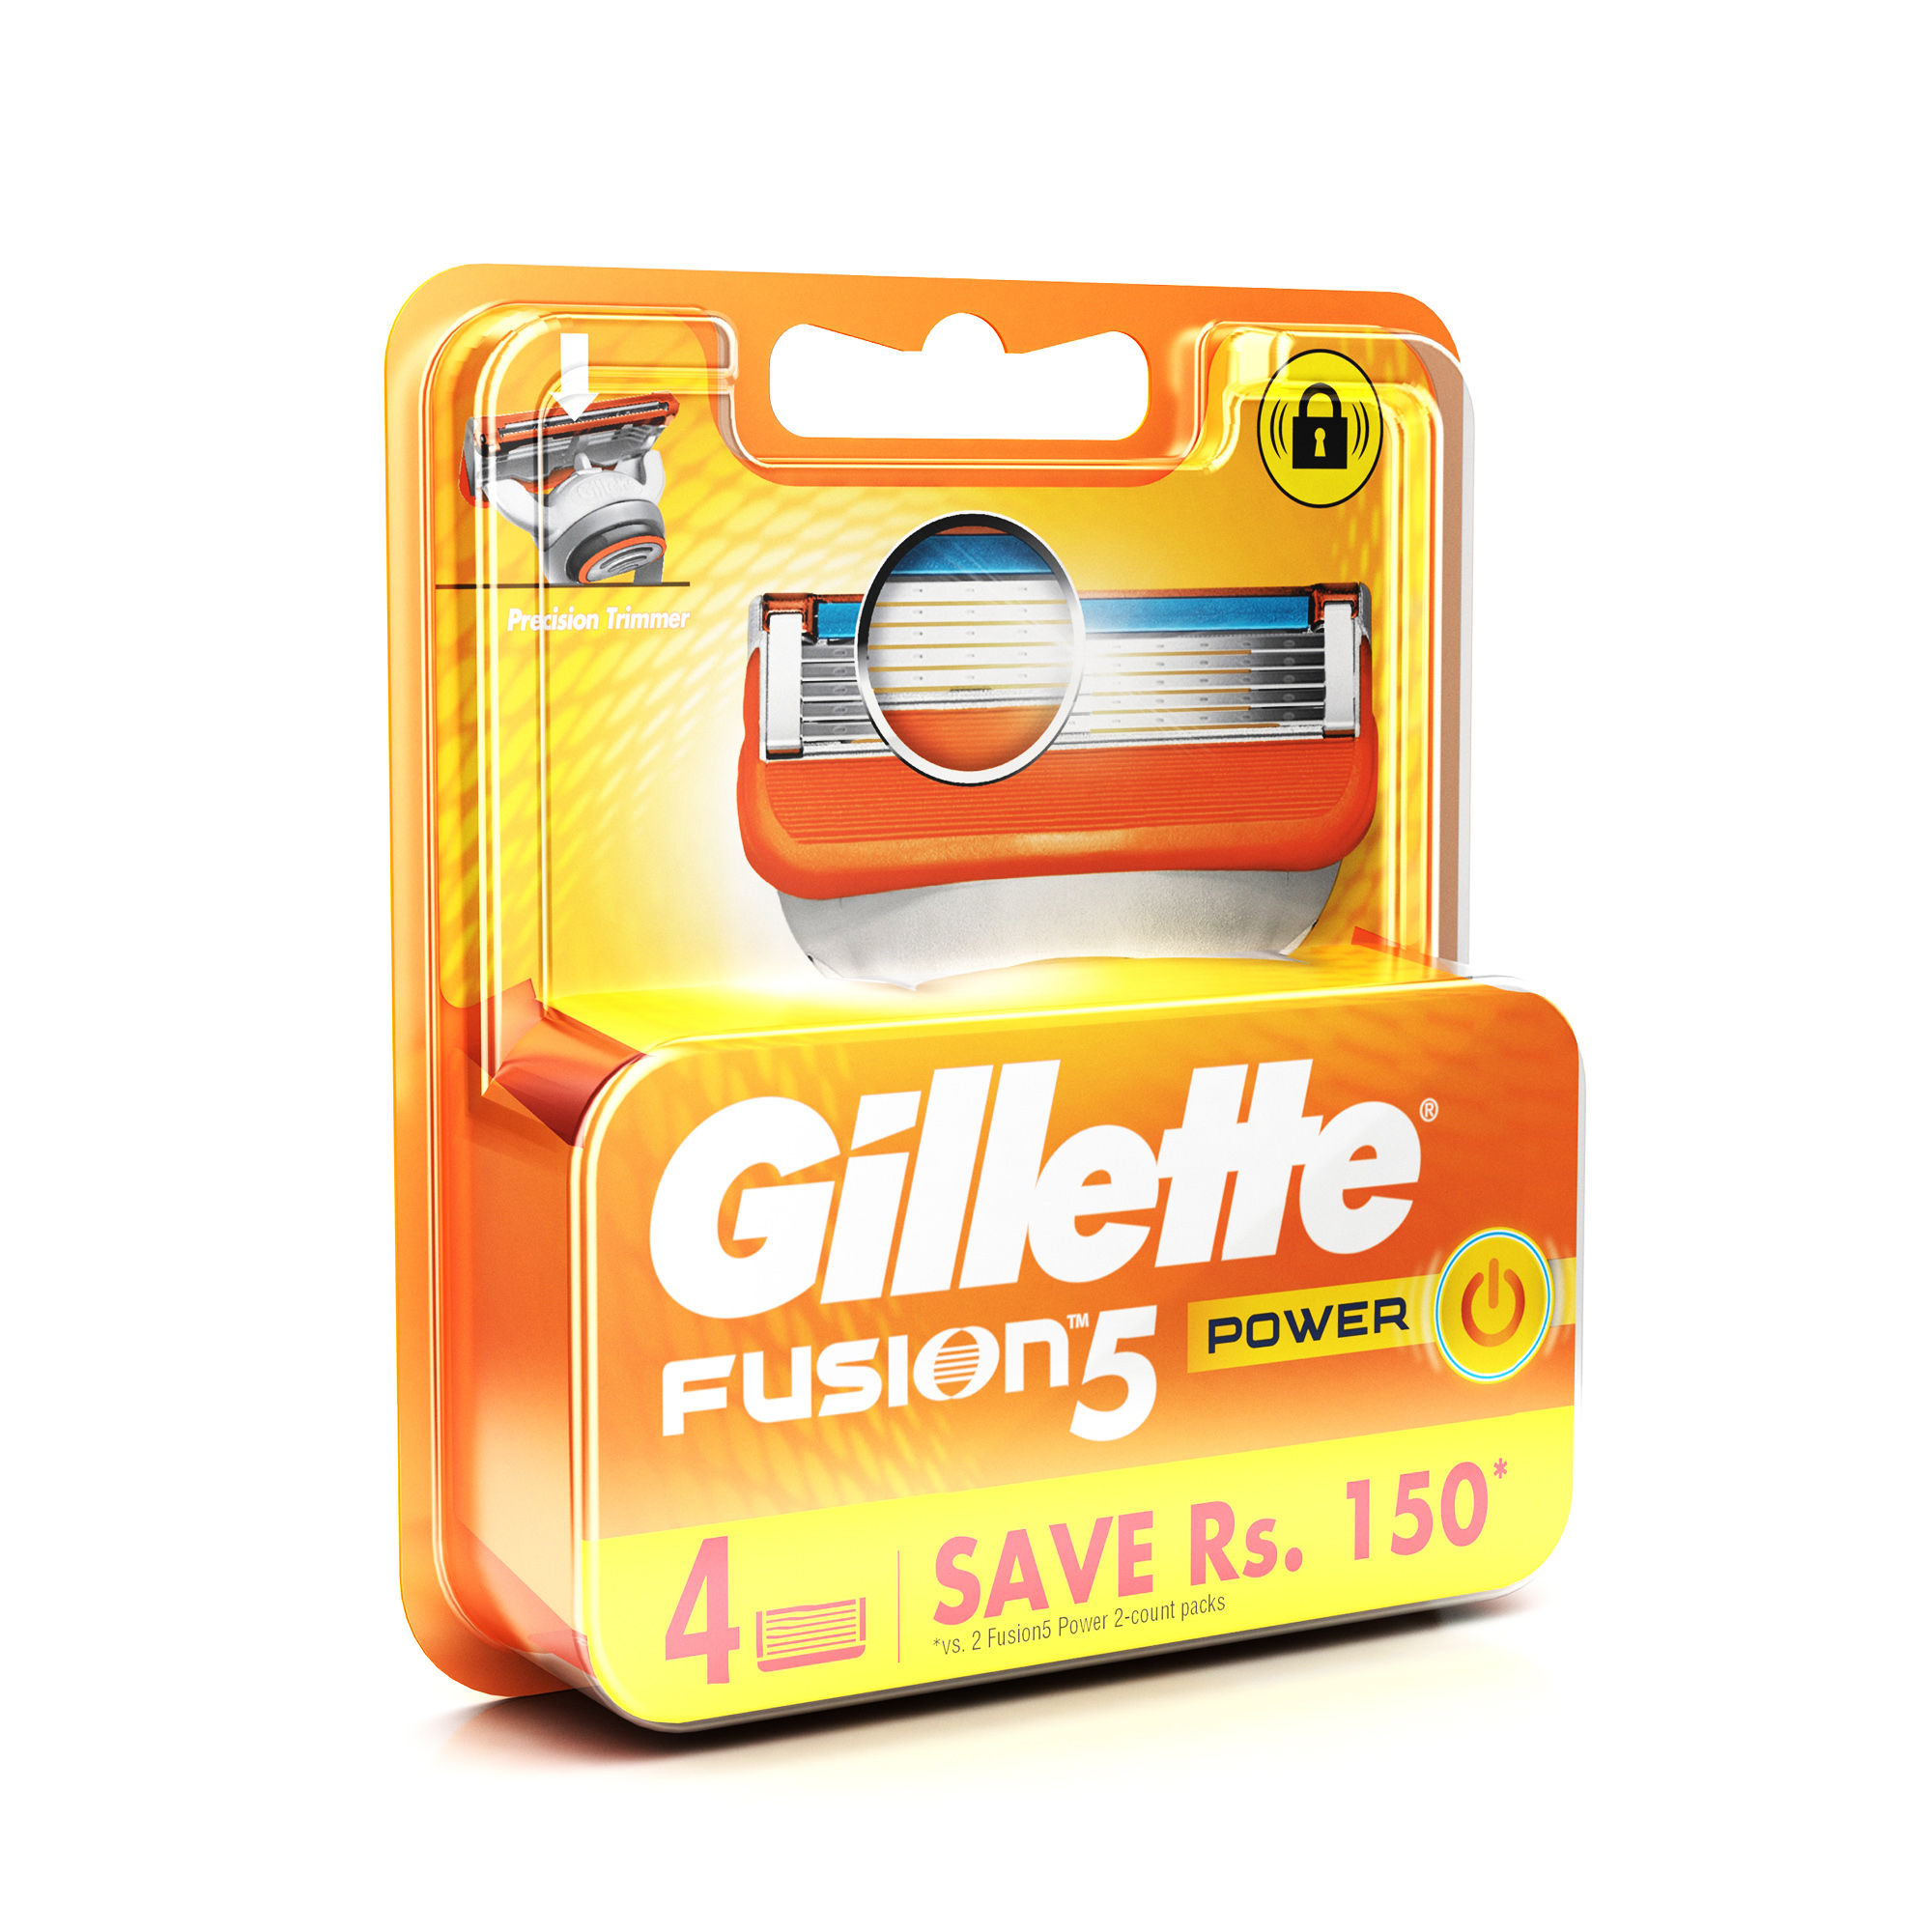 Gillette Fusion Power Shaving Razor Blades Cartridge 4s Pack Buy Gillette Fusion Power